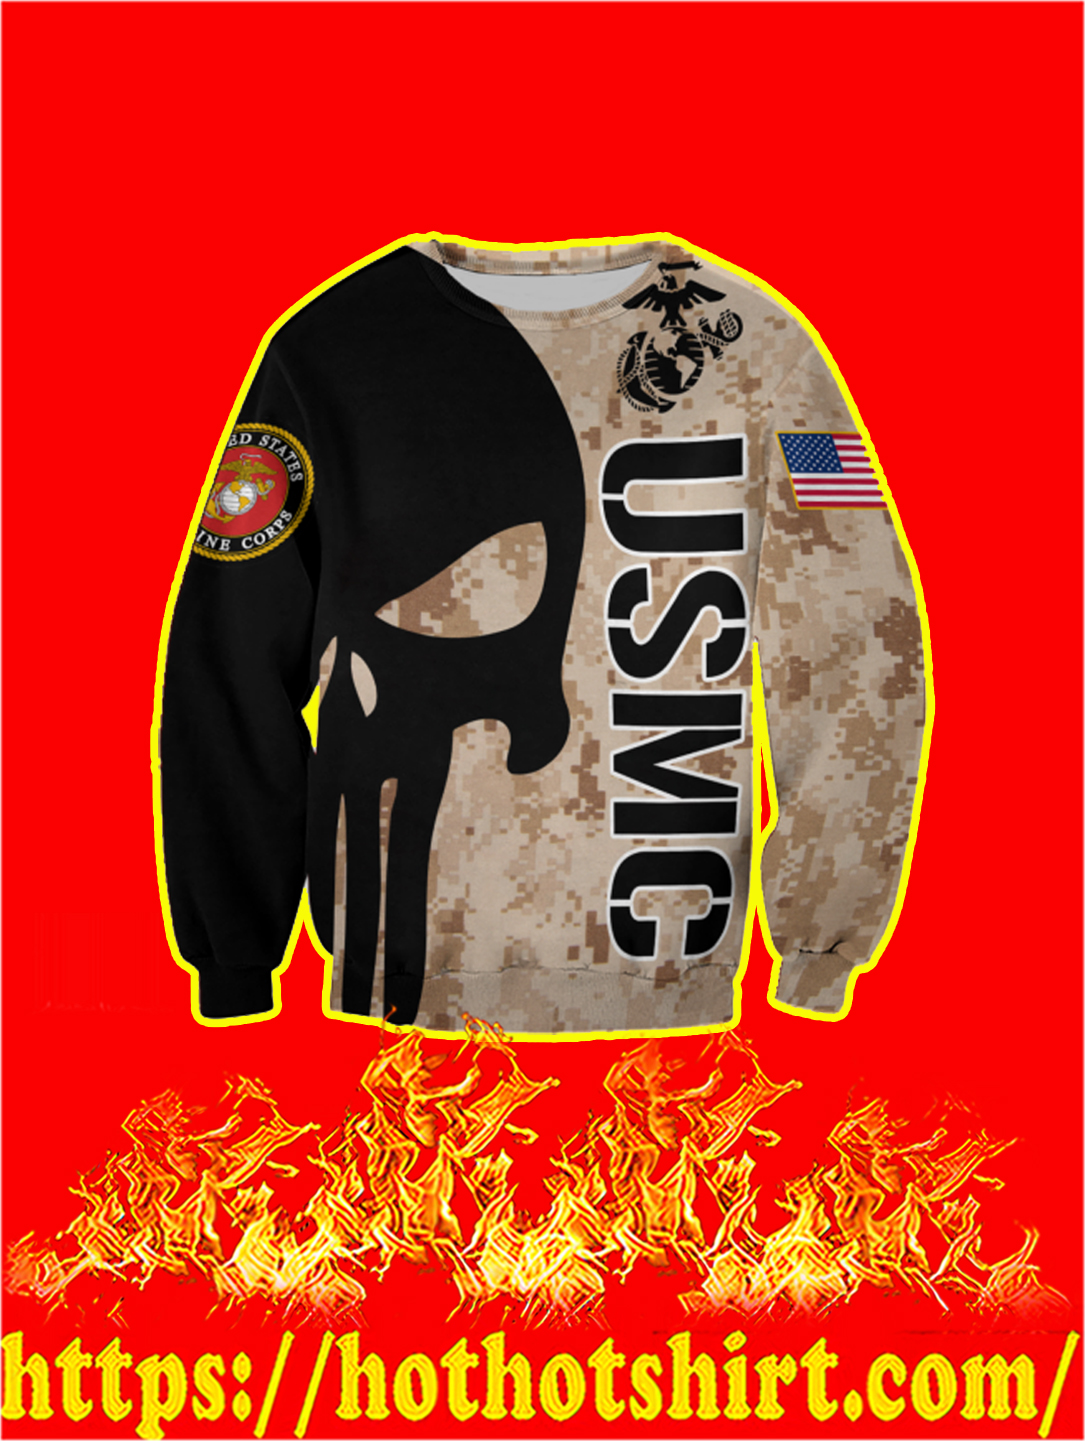 3D Printed USMC Punisher Skull T-shirt.